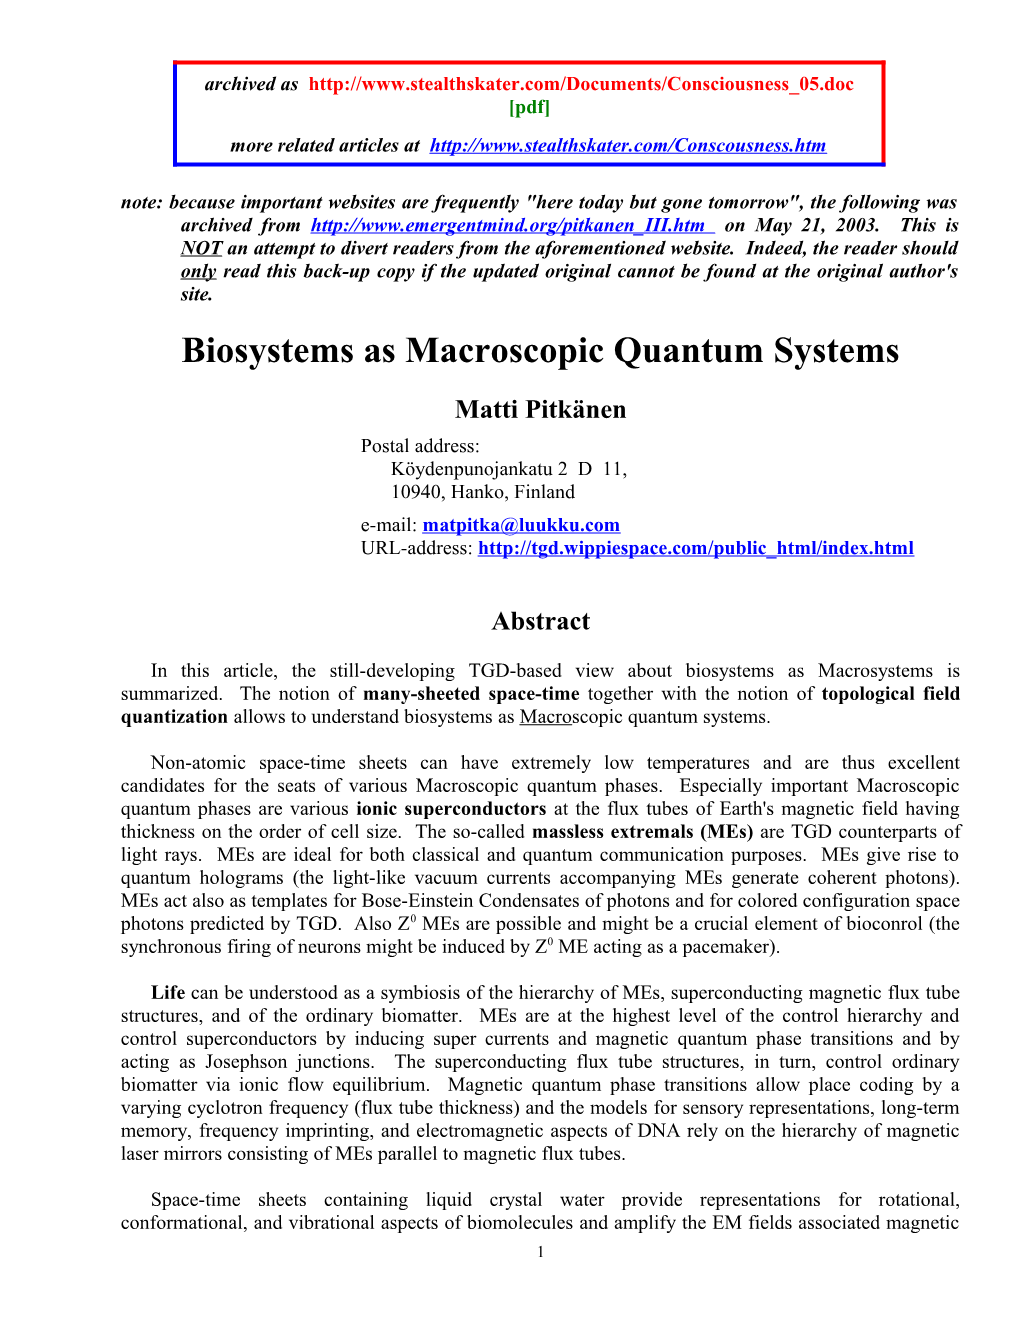 Biosystems As Macroscopic Quantum Systems